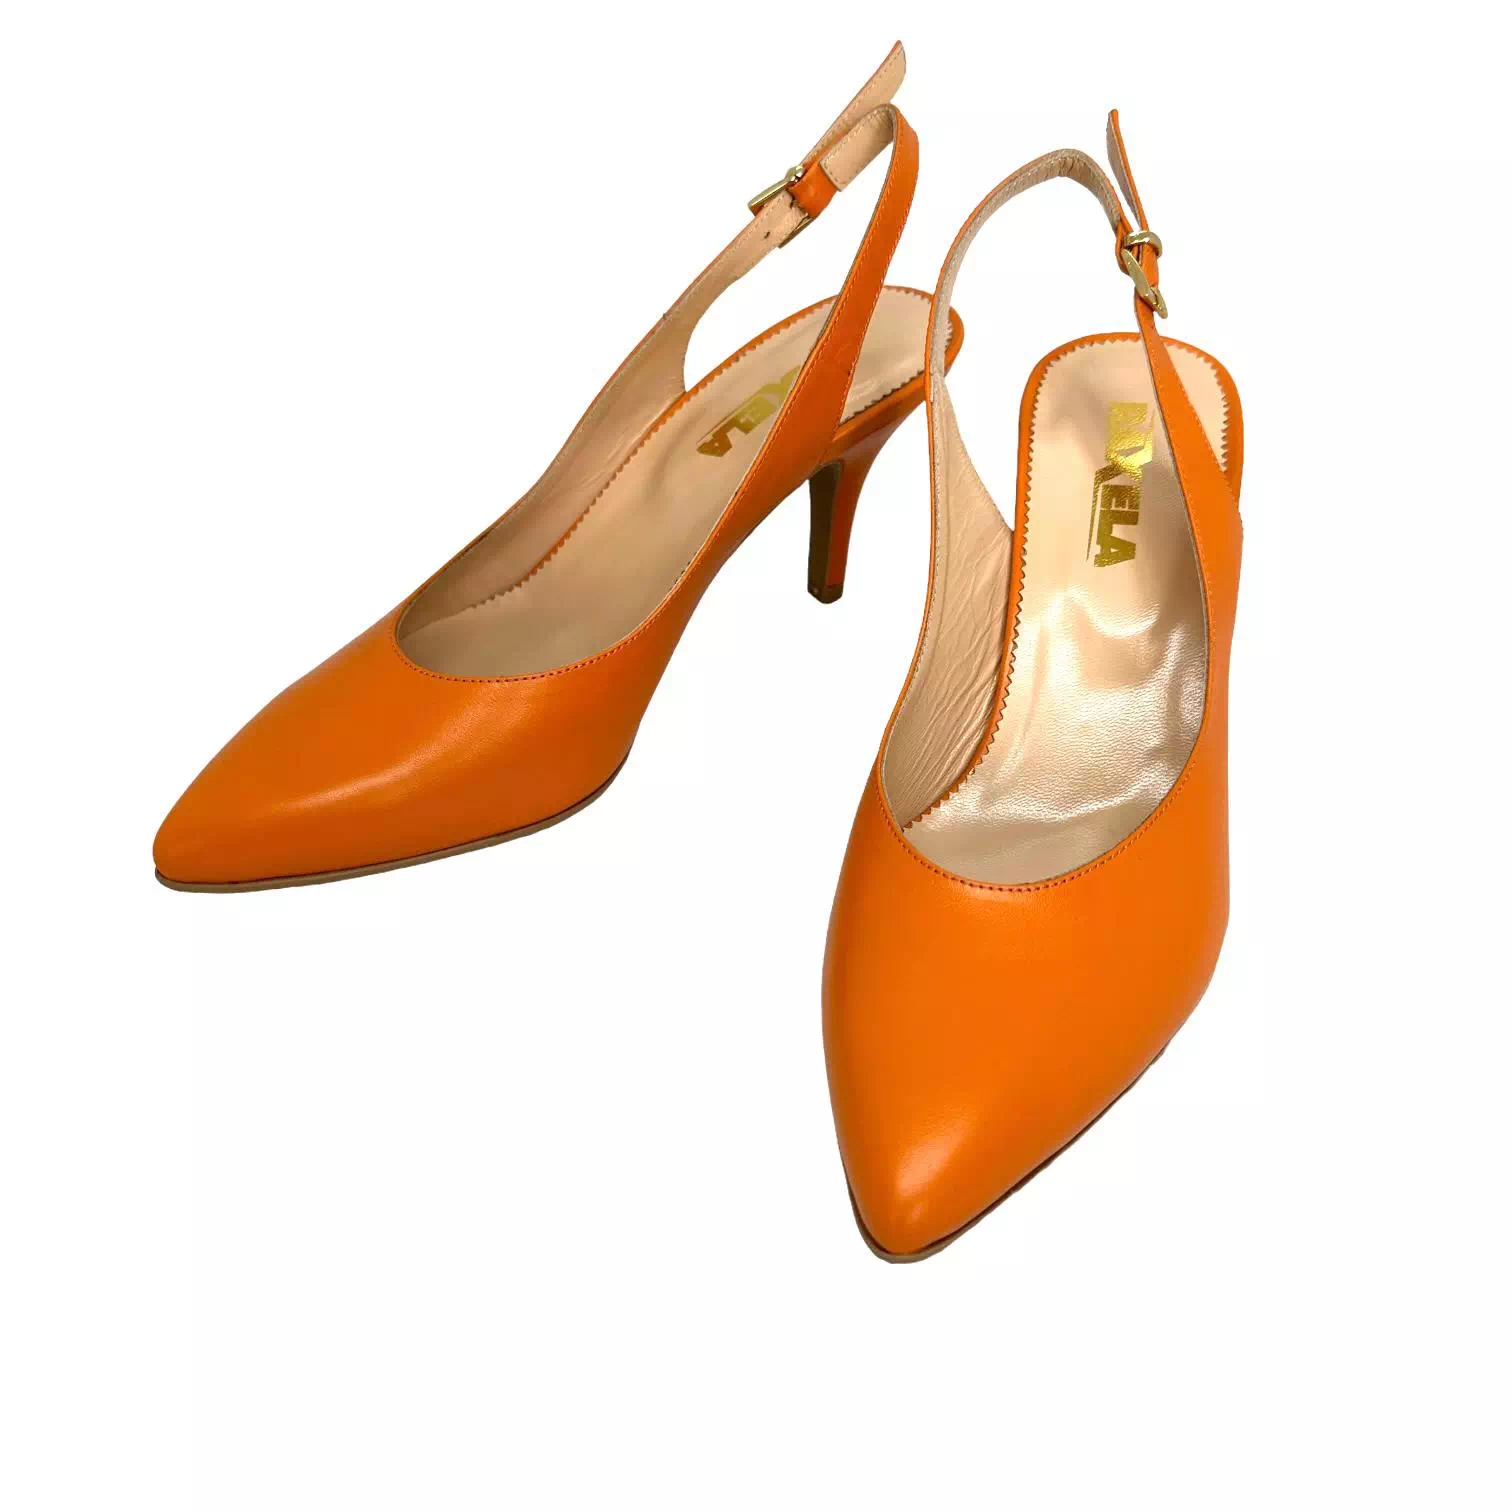 Pantofi Raxela portocalii decupati la spate cu toc cui